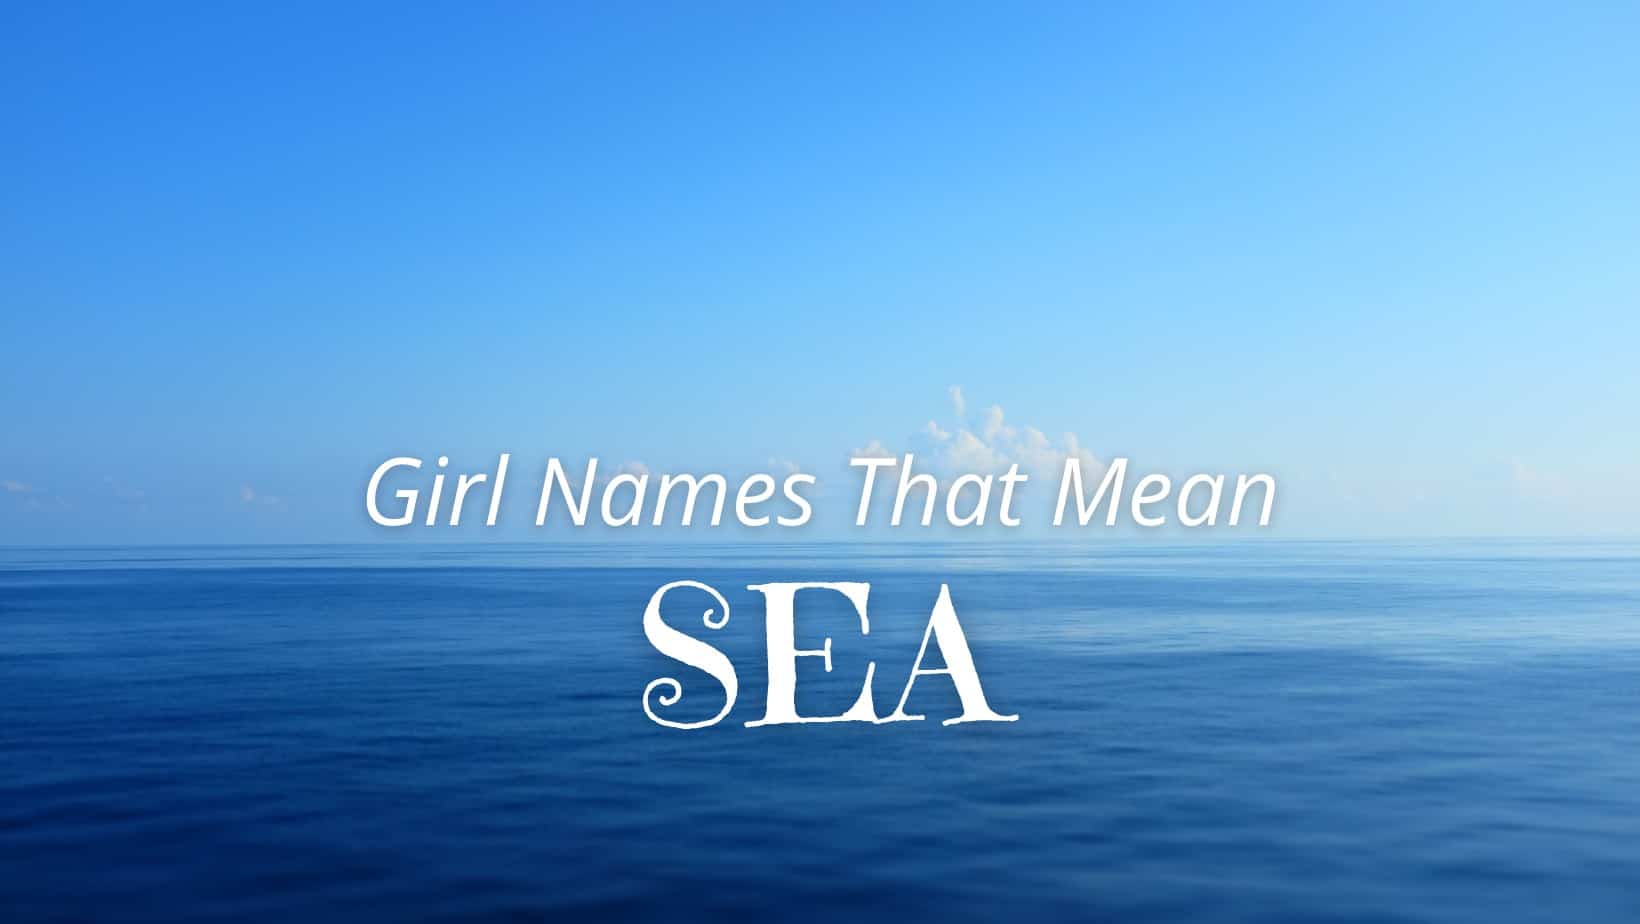 Girl Names That Mean Sea